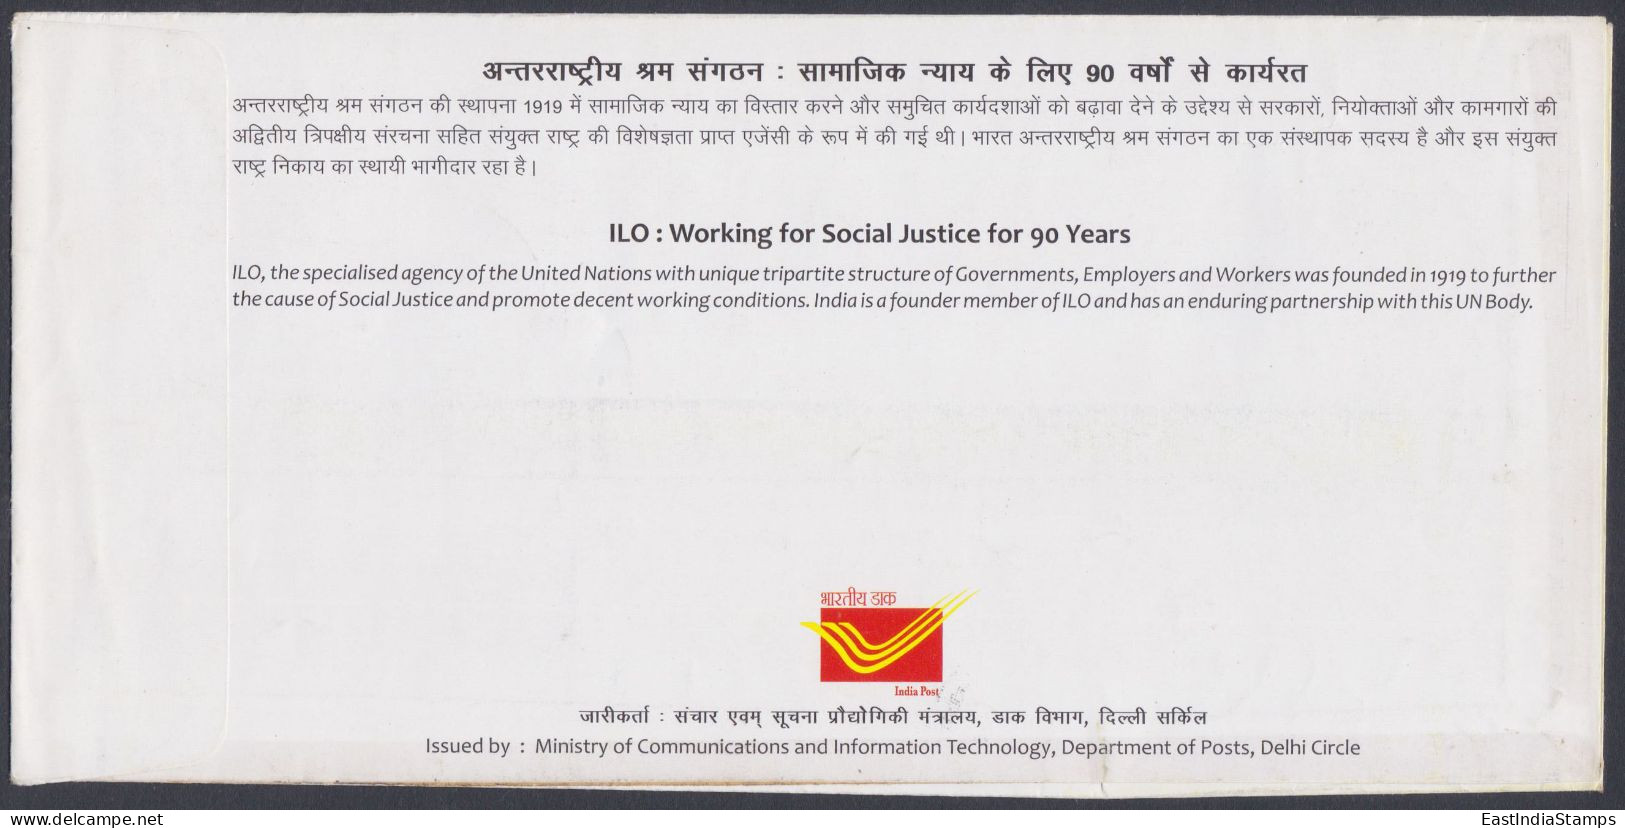 Inde India 2010 Special Cover International Labour Organisation, ILO, Social Justice, Farmer, Nurse, Pictorial Postmark - Briefe U. Dokumente